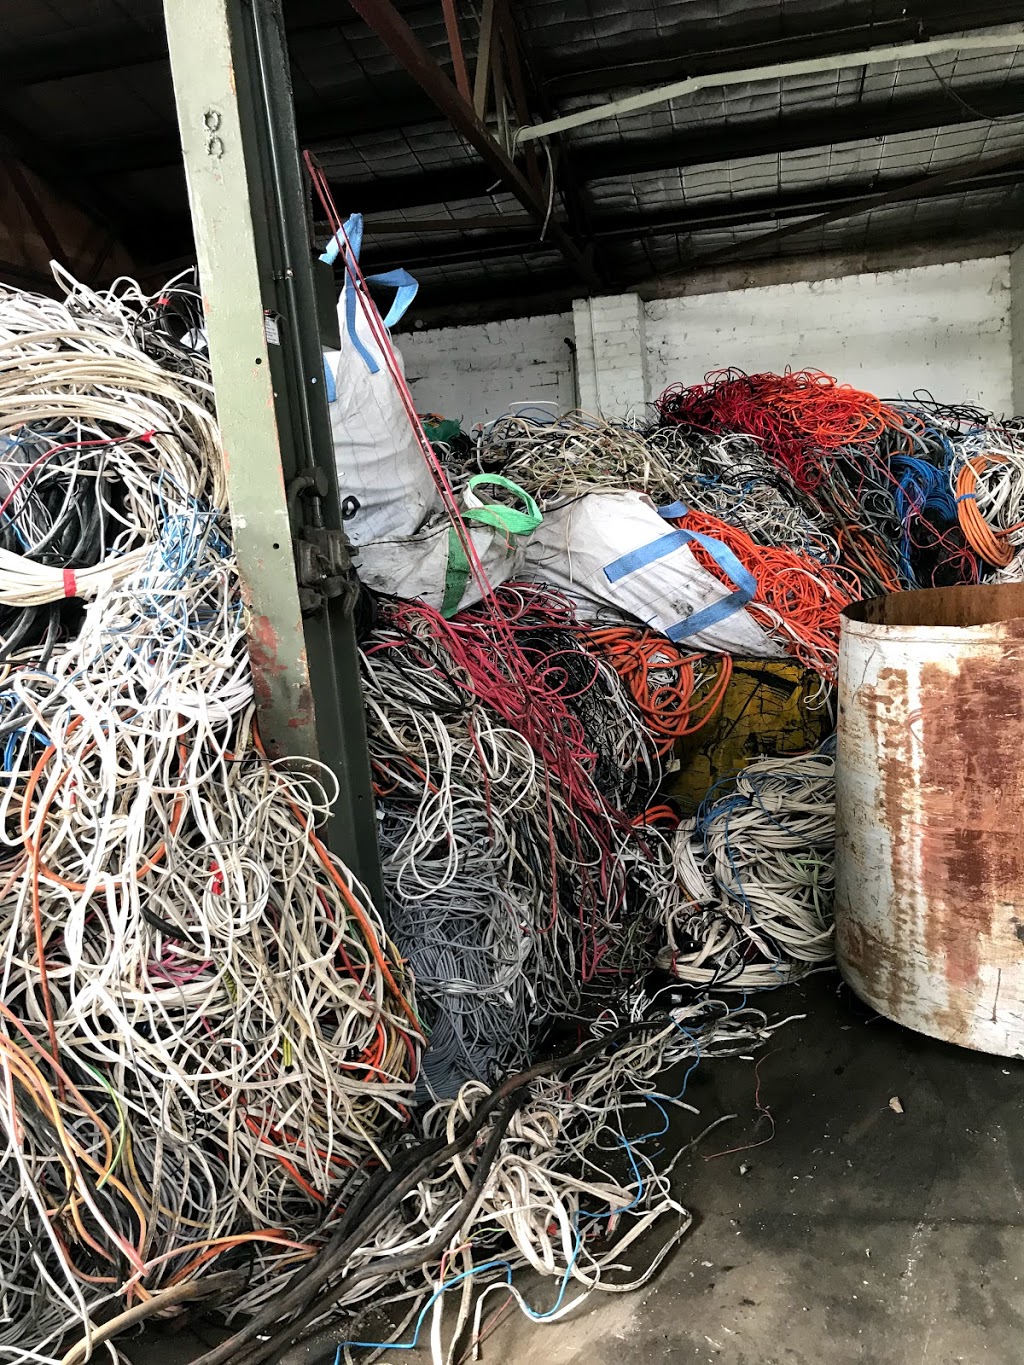 Botany Scrap Metal Recycling PTY LTD | car repair | 6 McFall St, Botany NSW 2019, Australia | 0280650401 OR +61 2 8065 0401